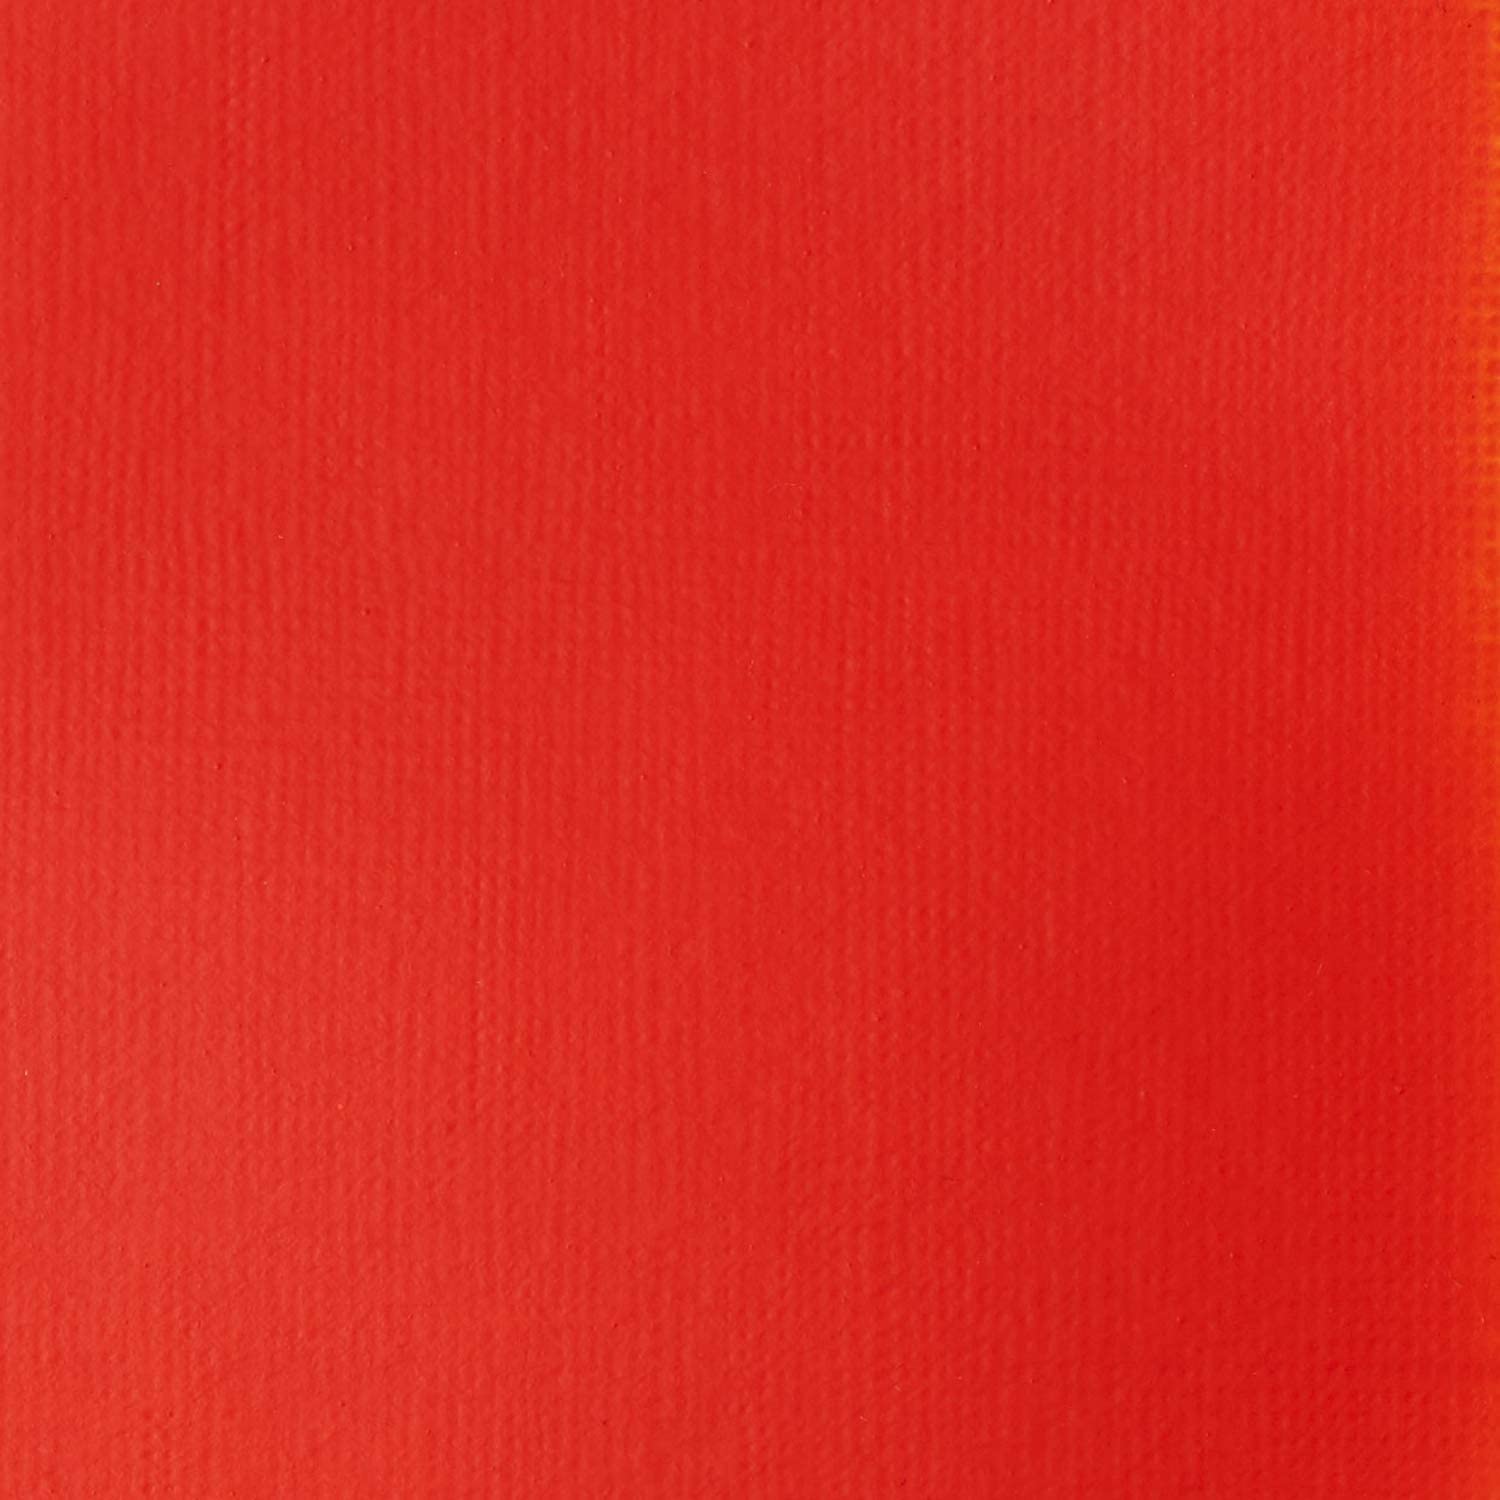 1046510 - Cadmium Red Light Hue 2.jpg